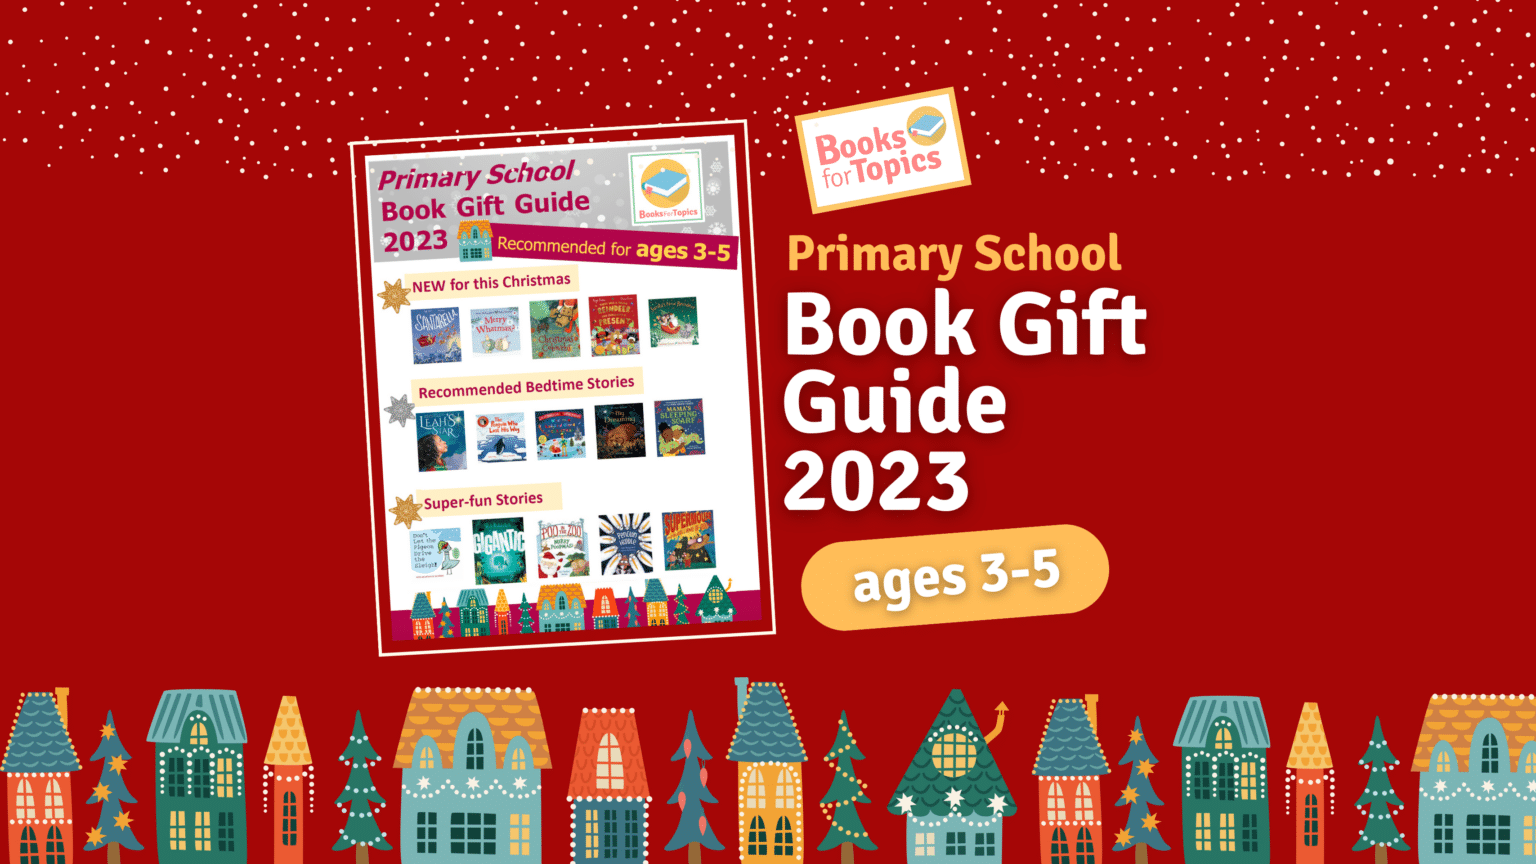 book gift guide eyfs 2023